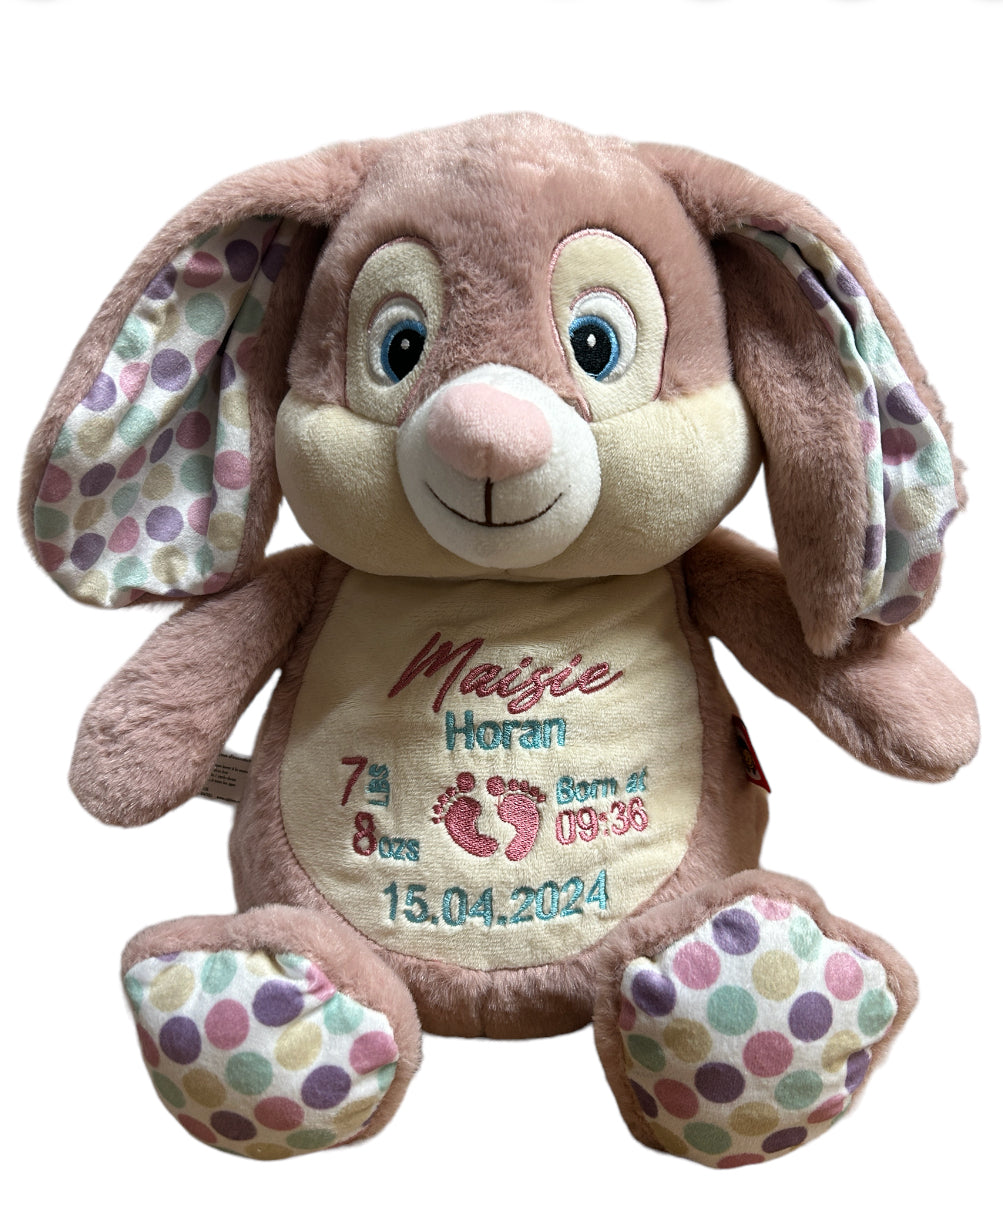 Dusky Pink Bunny Polka Dot Personalised Teddy